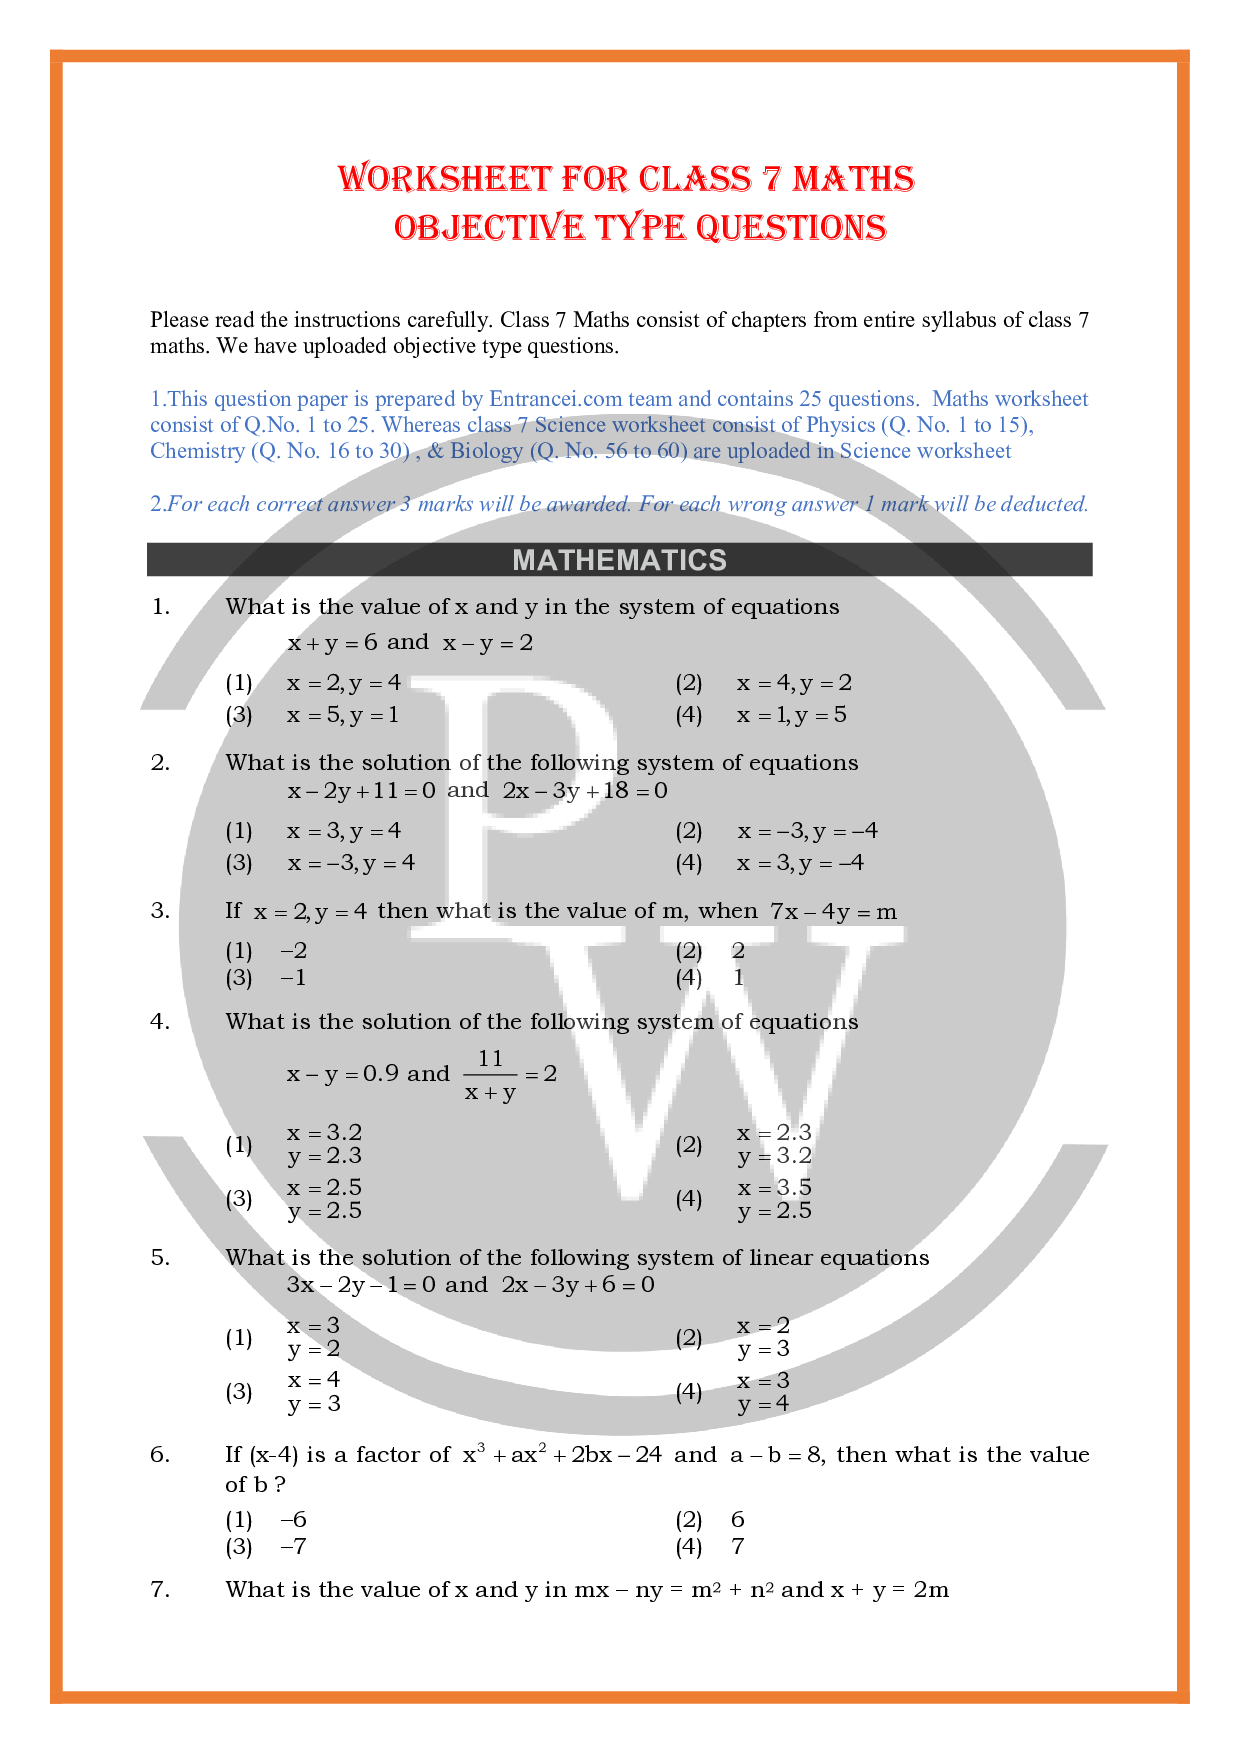 Class 7 Maths Worksheet 8 With Answer Key Physics Wallah Math Worksheet Answers